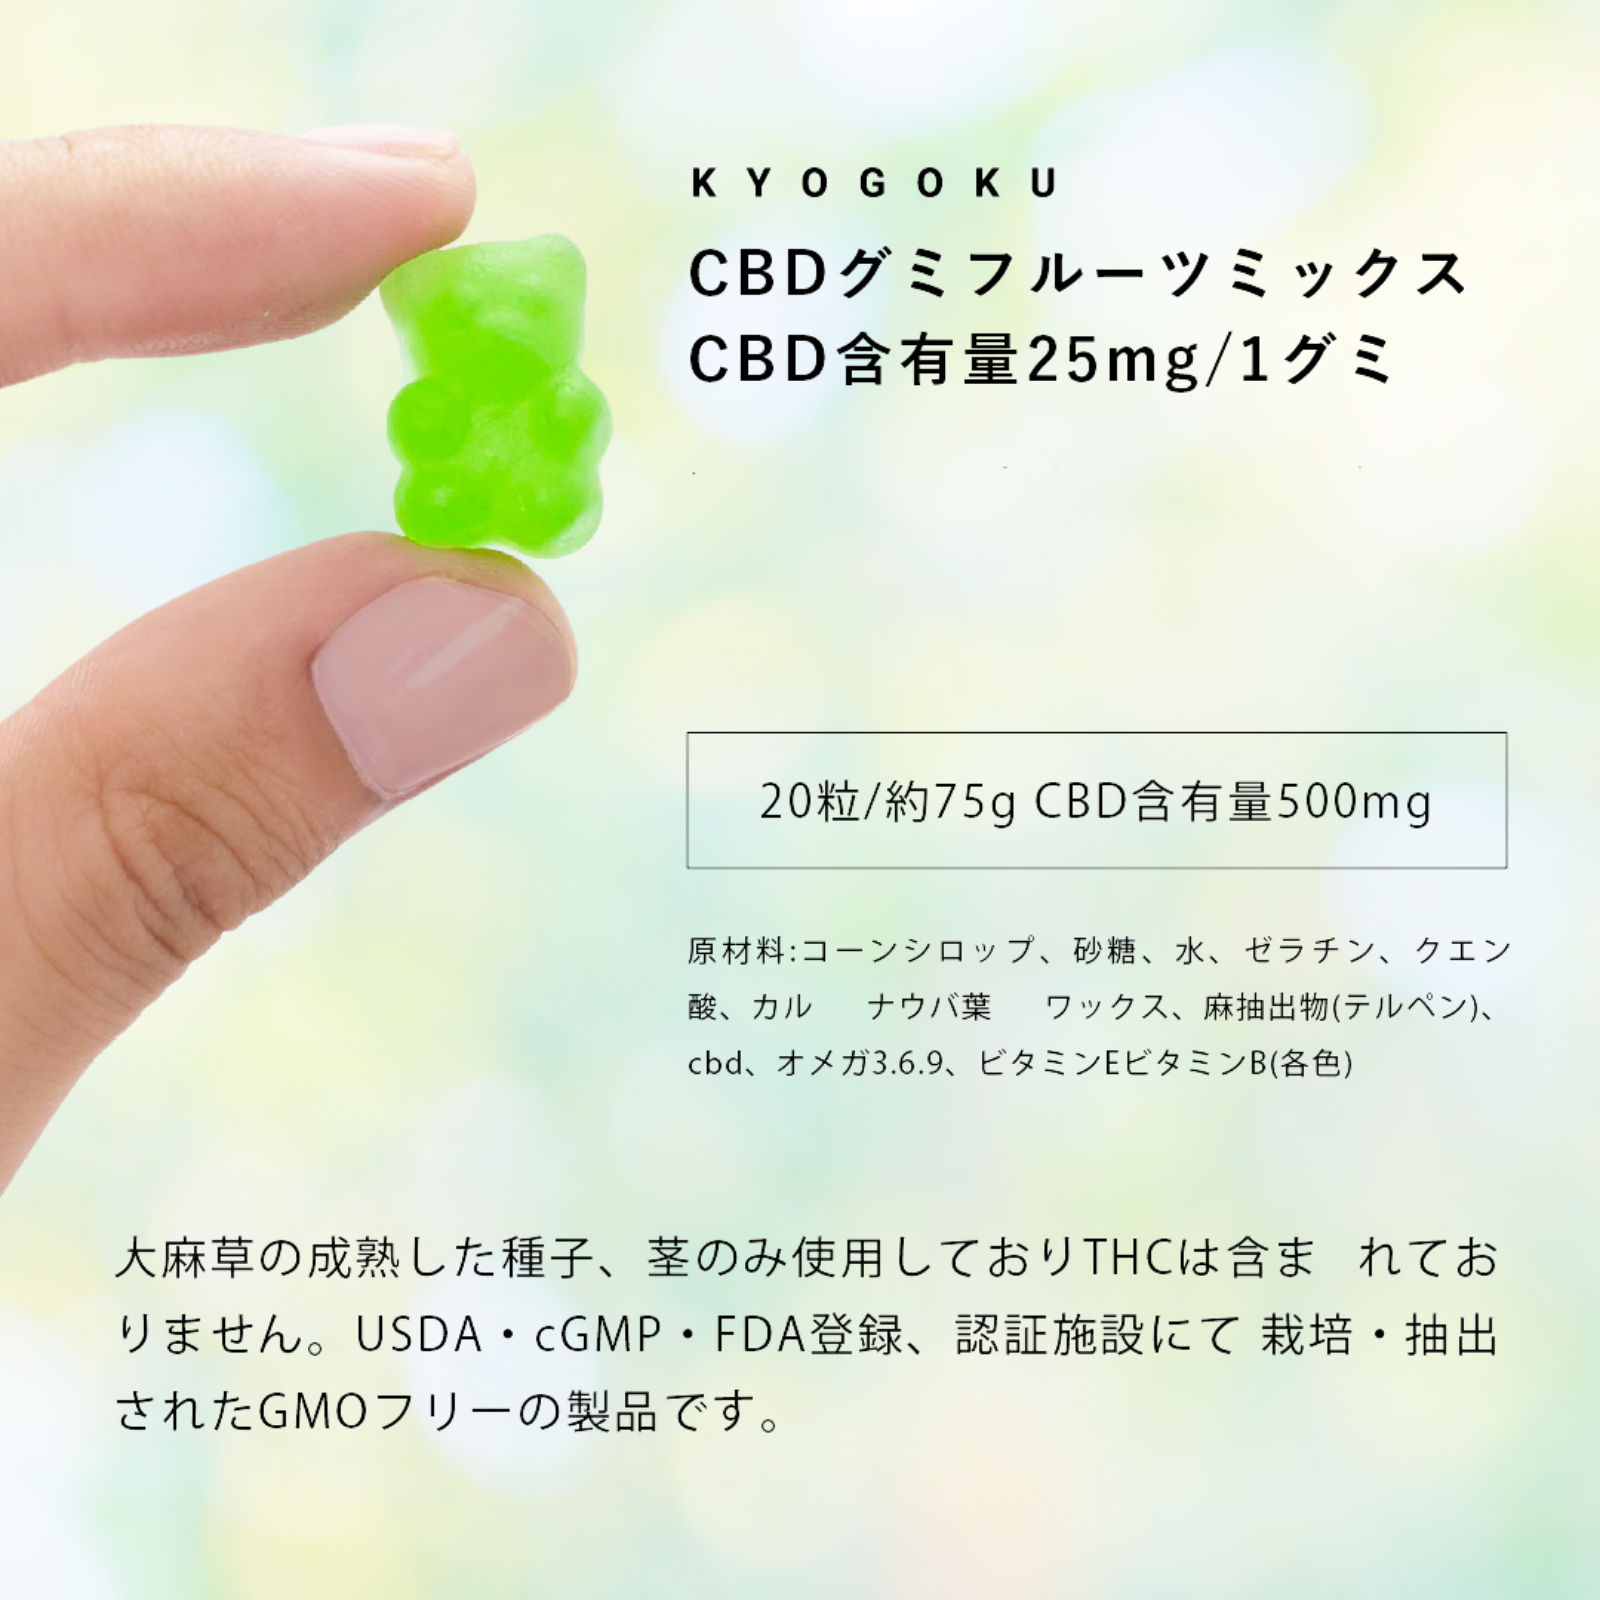 Kyogoku Professional Kyogoku CBDグミ 20個入り フルーツ味 総含有量 500mg